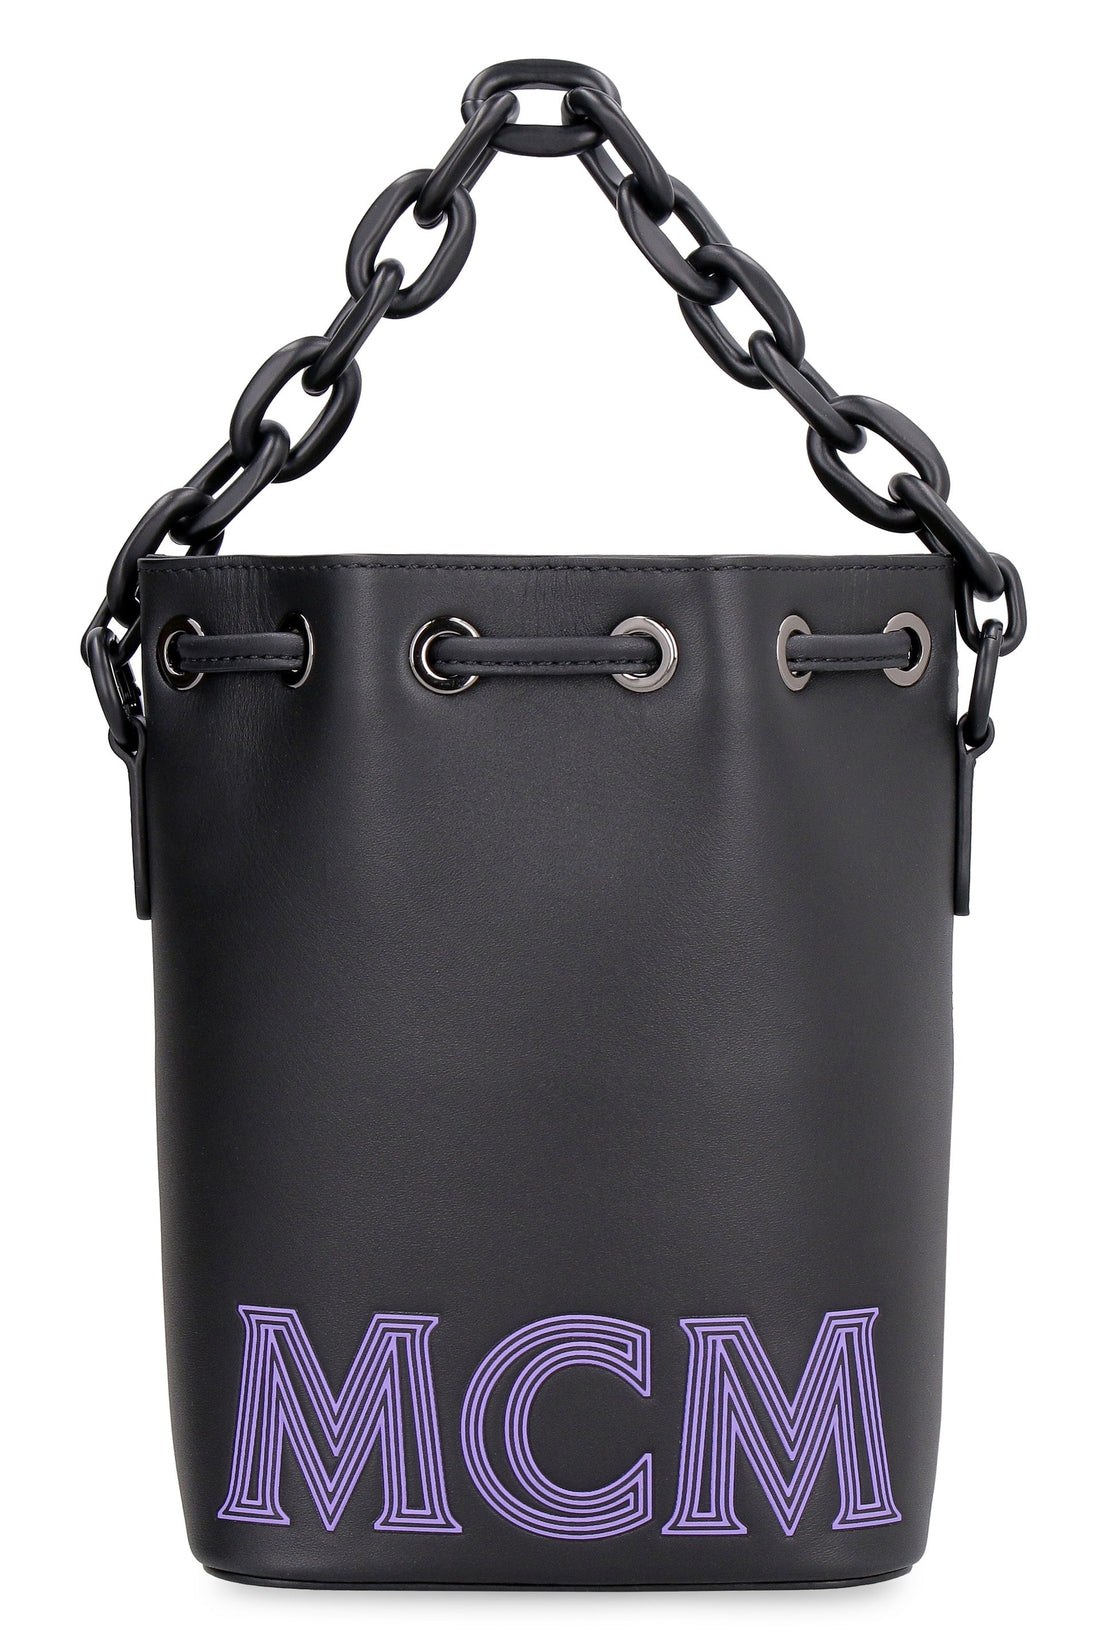 MCM-OUTLET-SALE-Leather bucket bag-ARCHIVIST